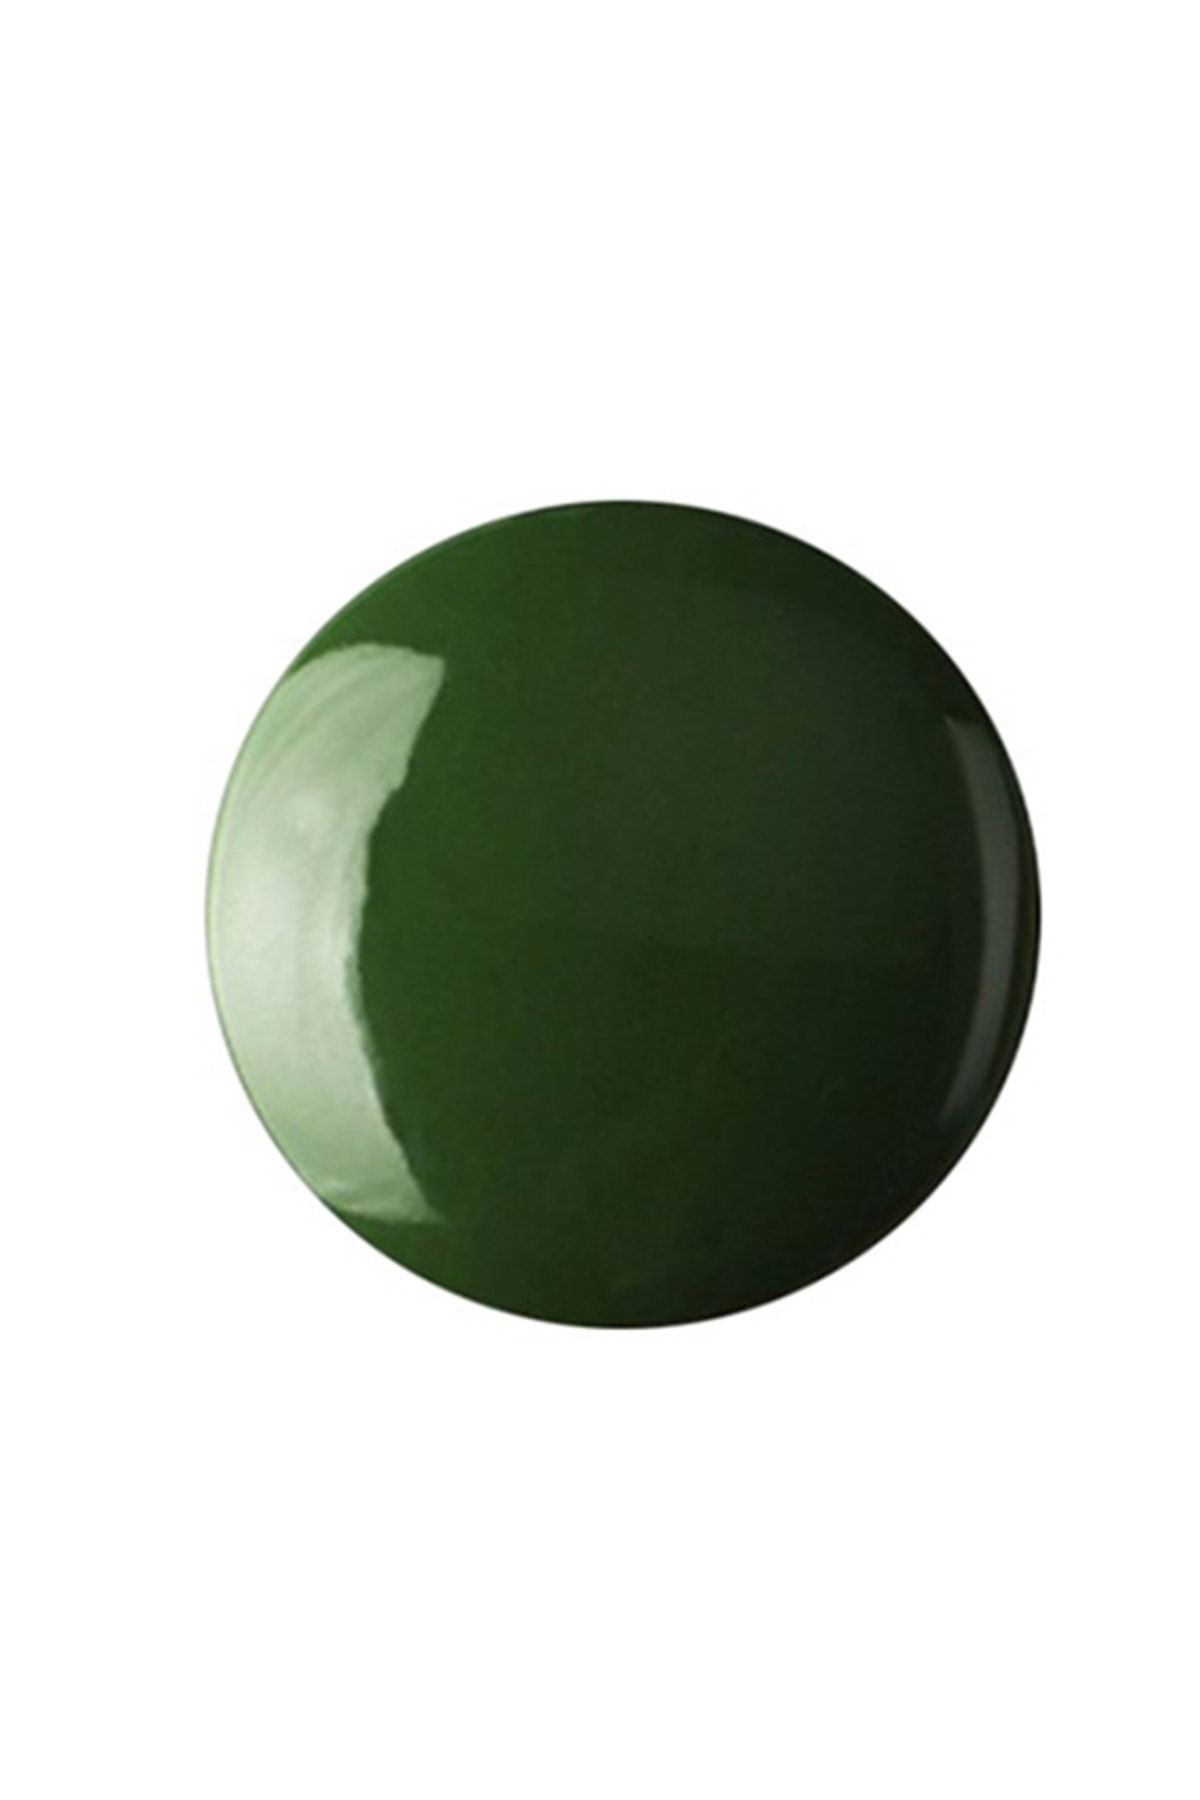 Refsan Renkli Hazır Seramik Sır 803-3 Haki Yeşil (1050 °C) - 5 Kg